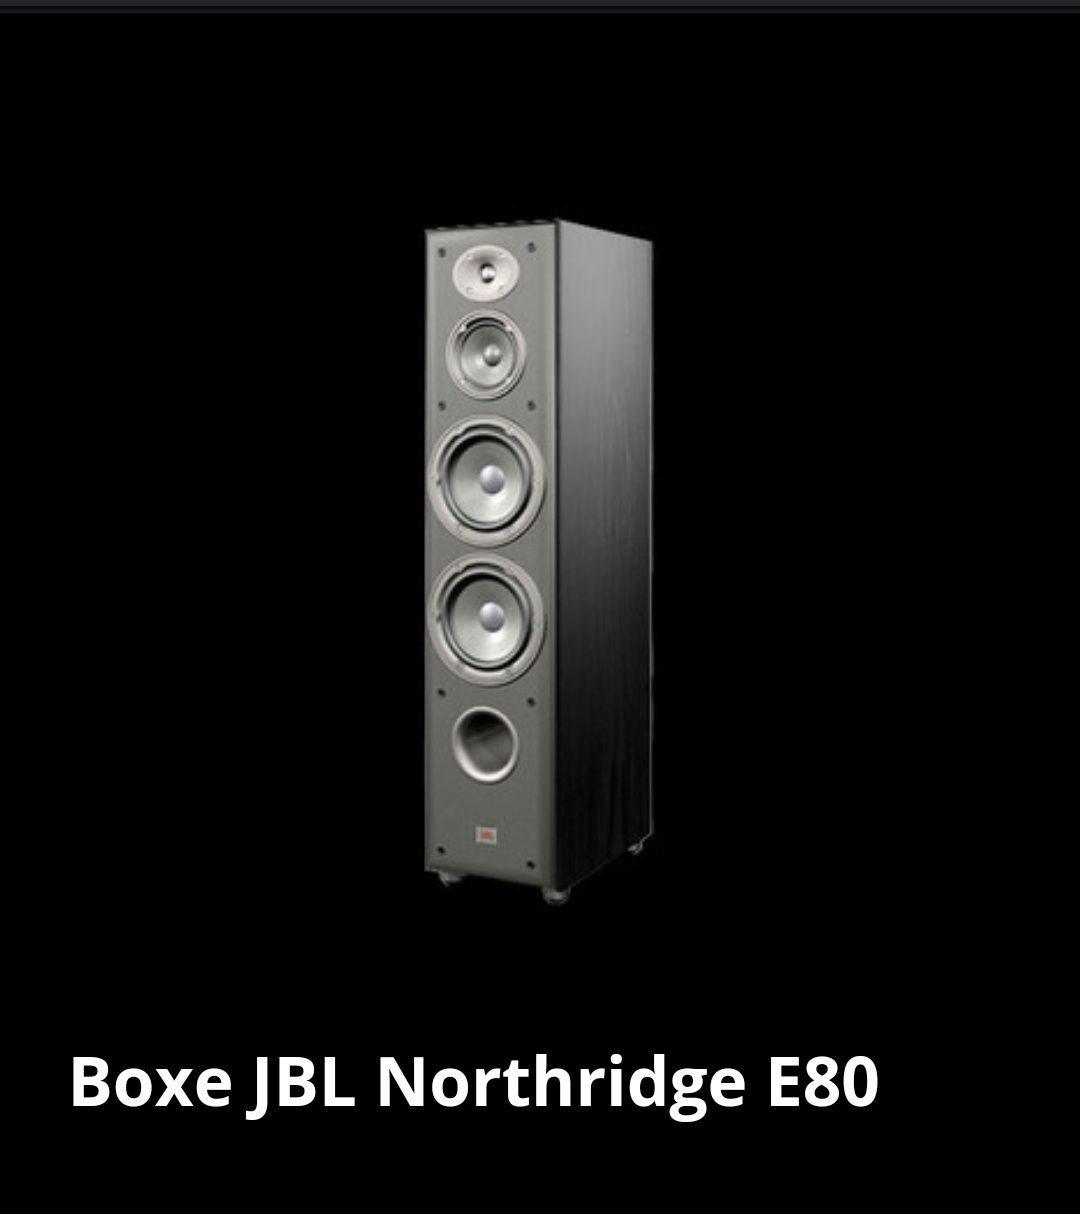 Boxe JBL Northridge E80